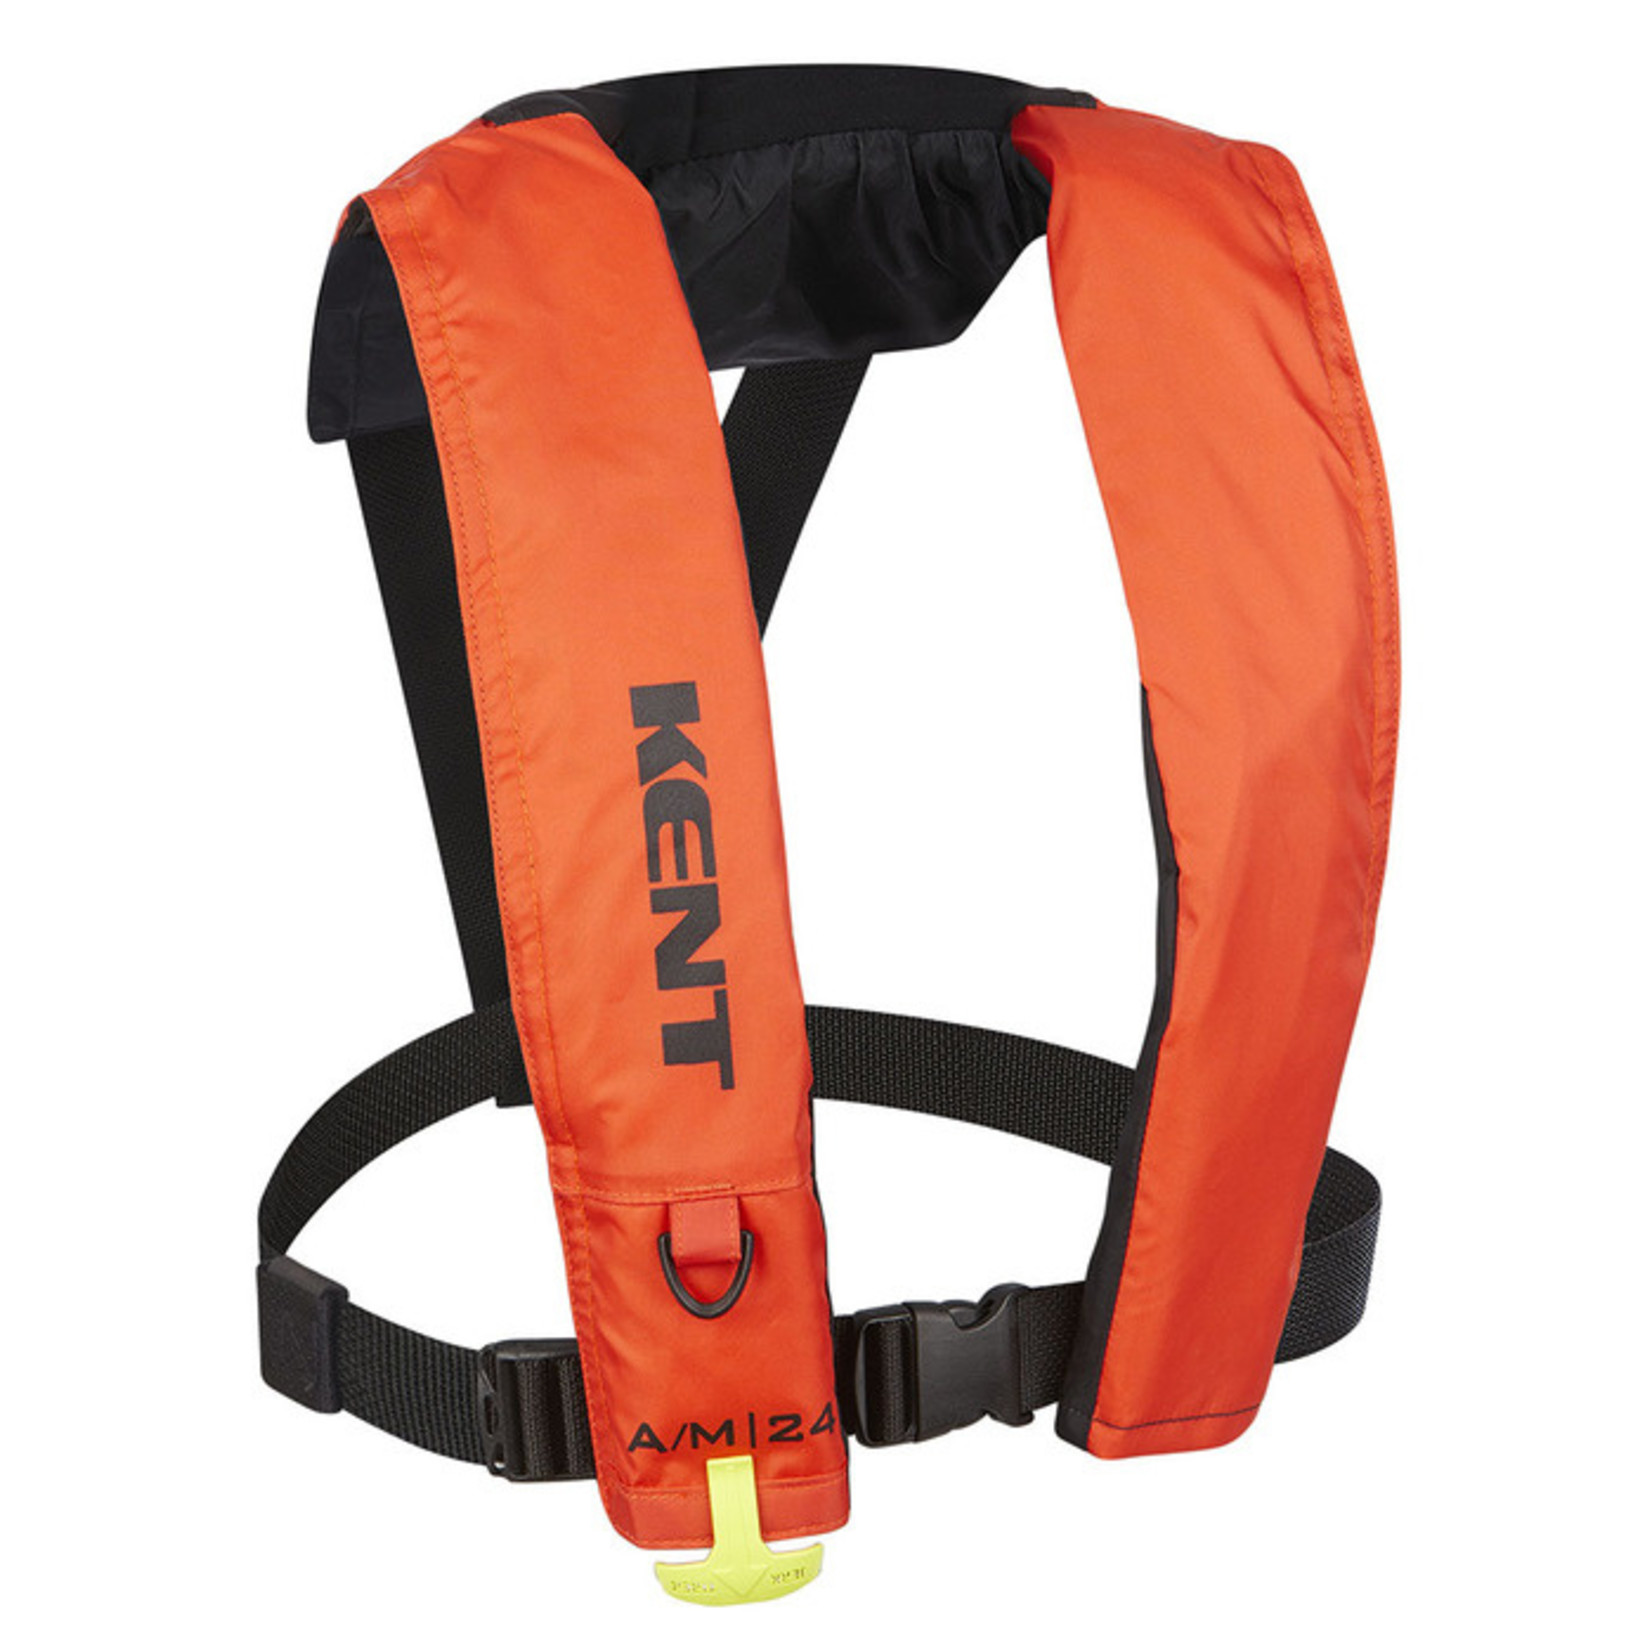 KENT A/M 24 Automatic/Manual Inflatable Life Jacket Orange